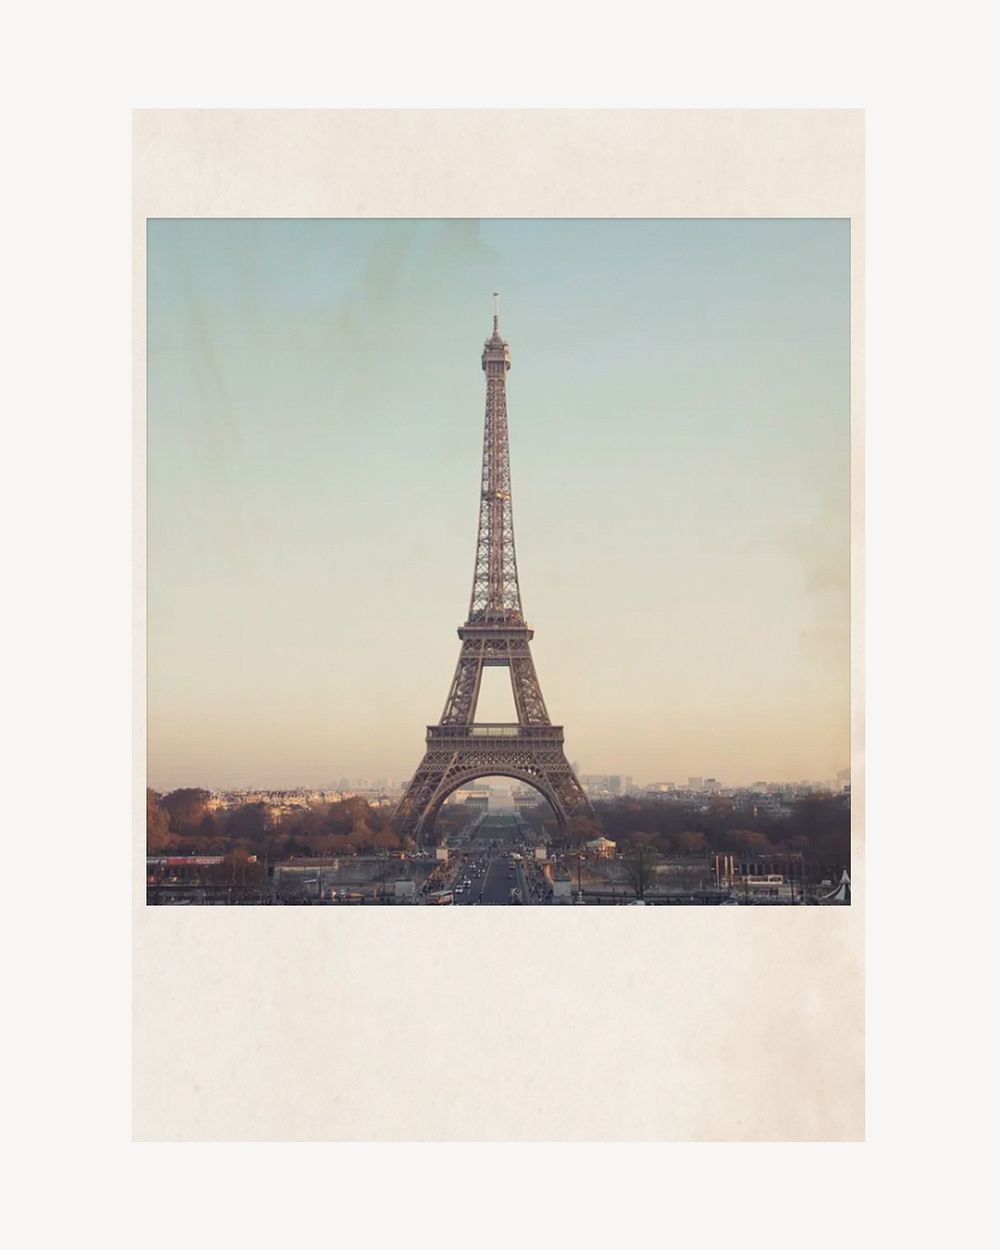 Eiffel tower, France in instant film frame